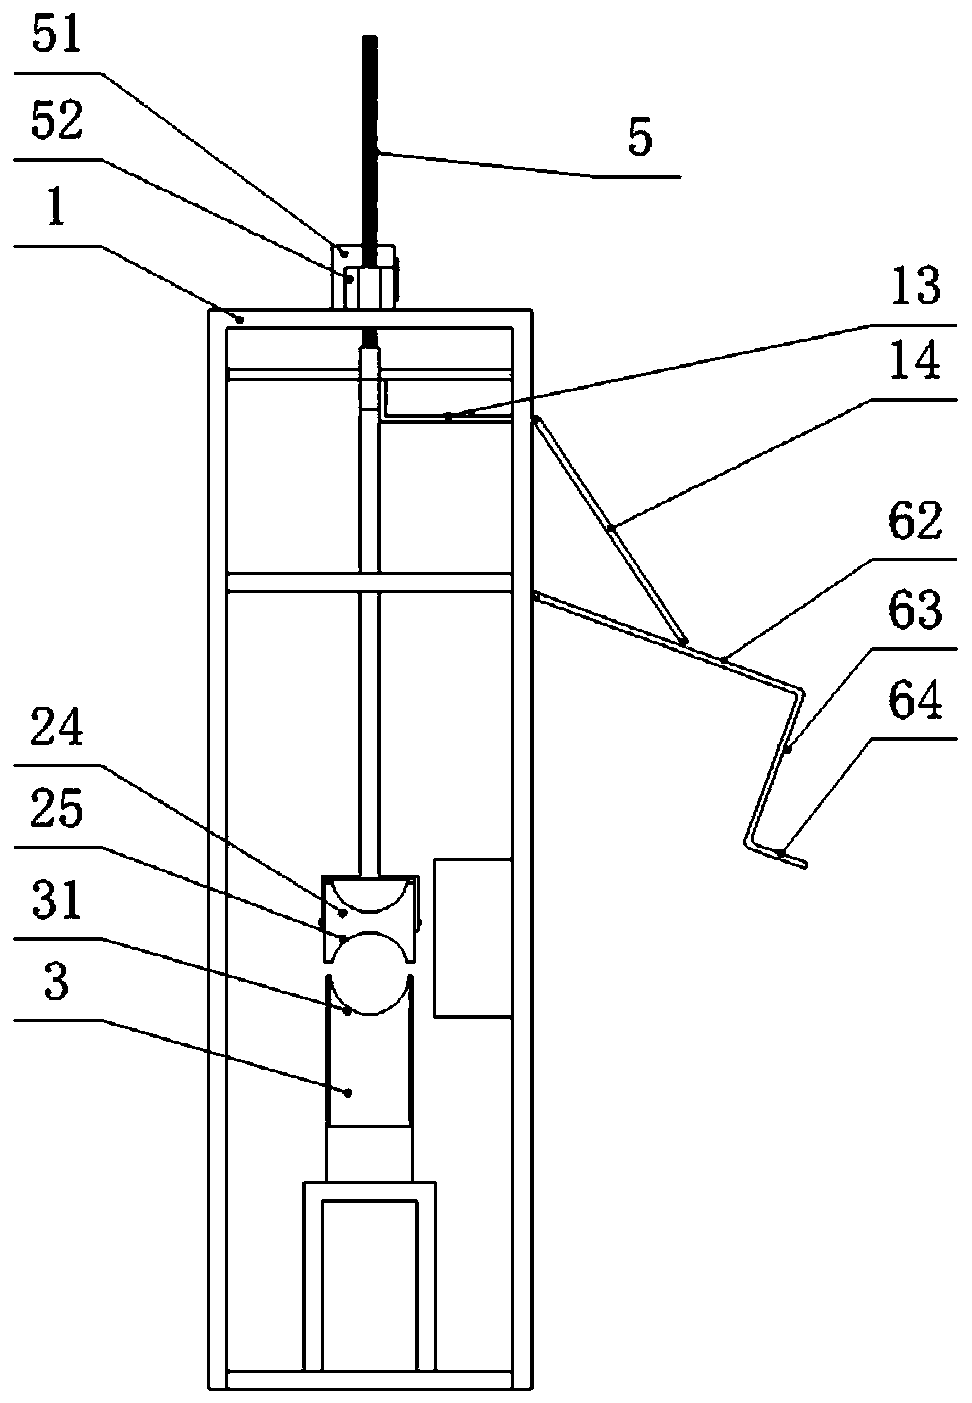 Vertical plastic pipe bending device